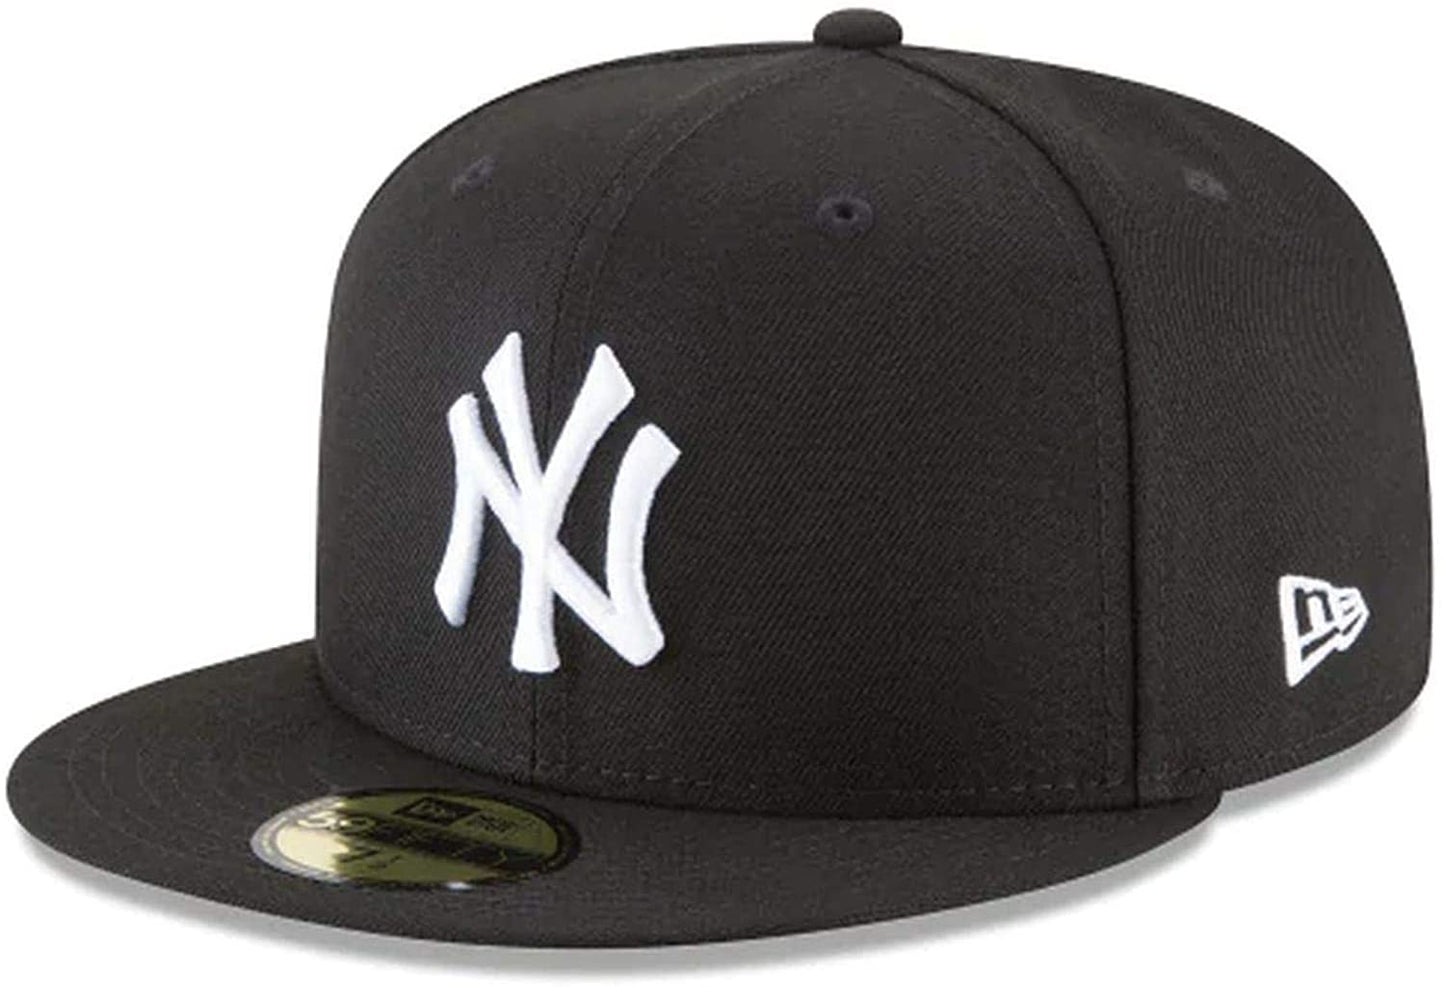 New Era 59FIFTY MLB New York Yankees Basic Black/White Fitted Cap 11591127